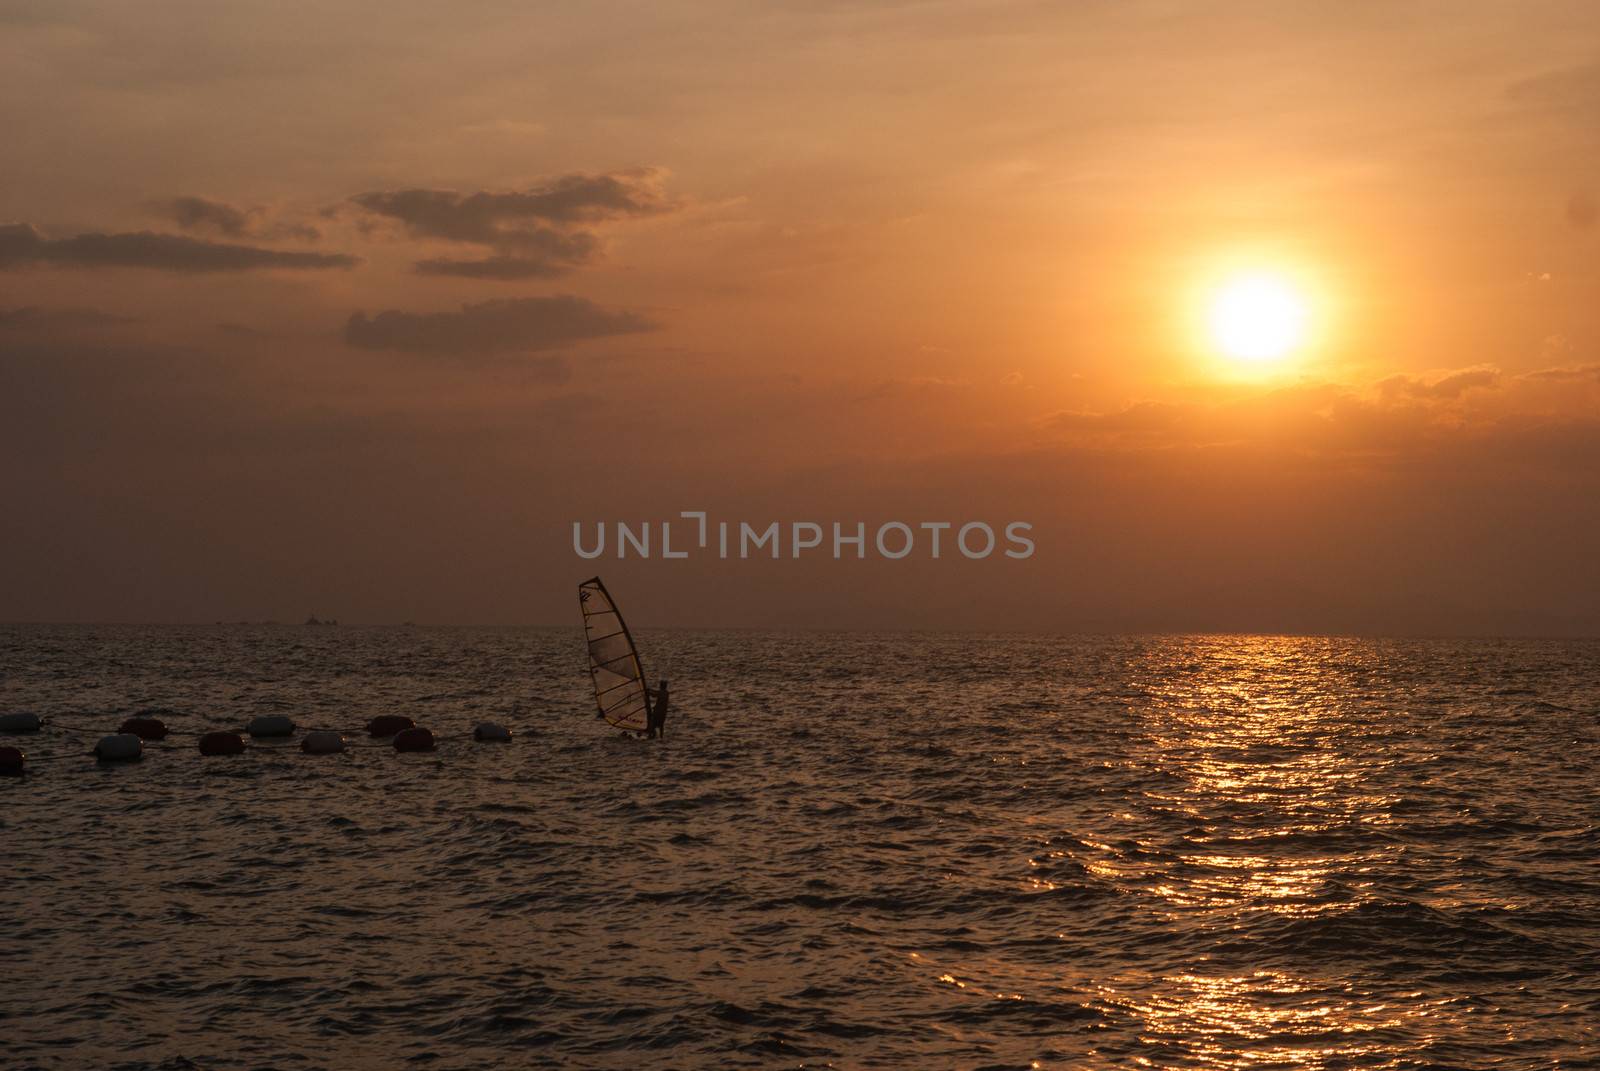 Wind surfer at the sunset, Pattaya, Thailand